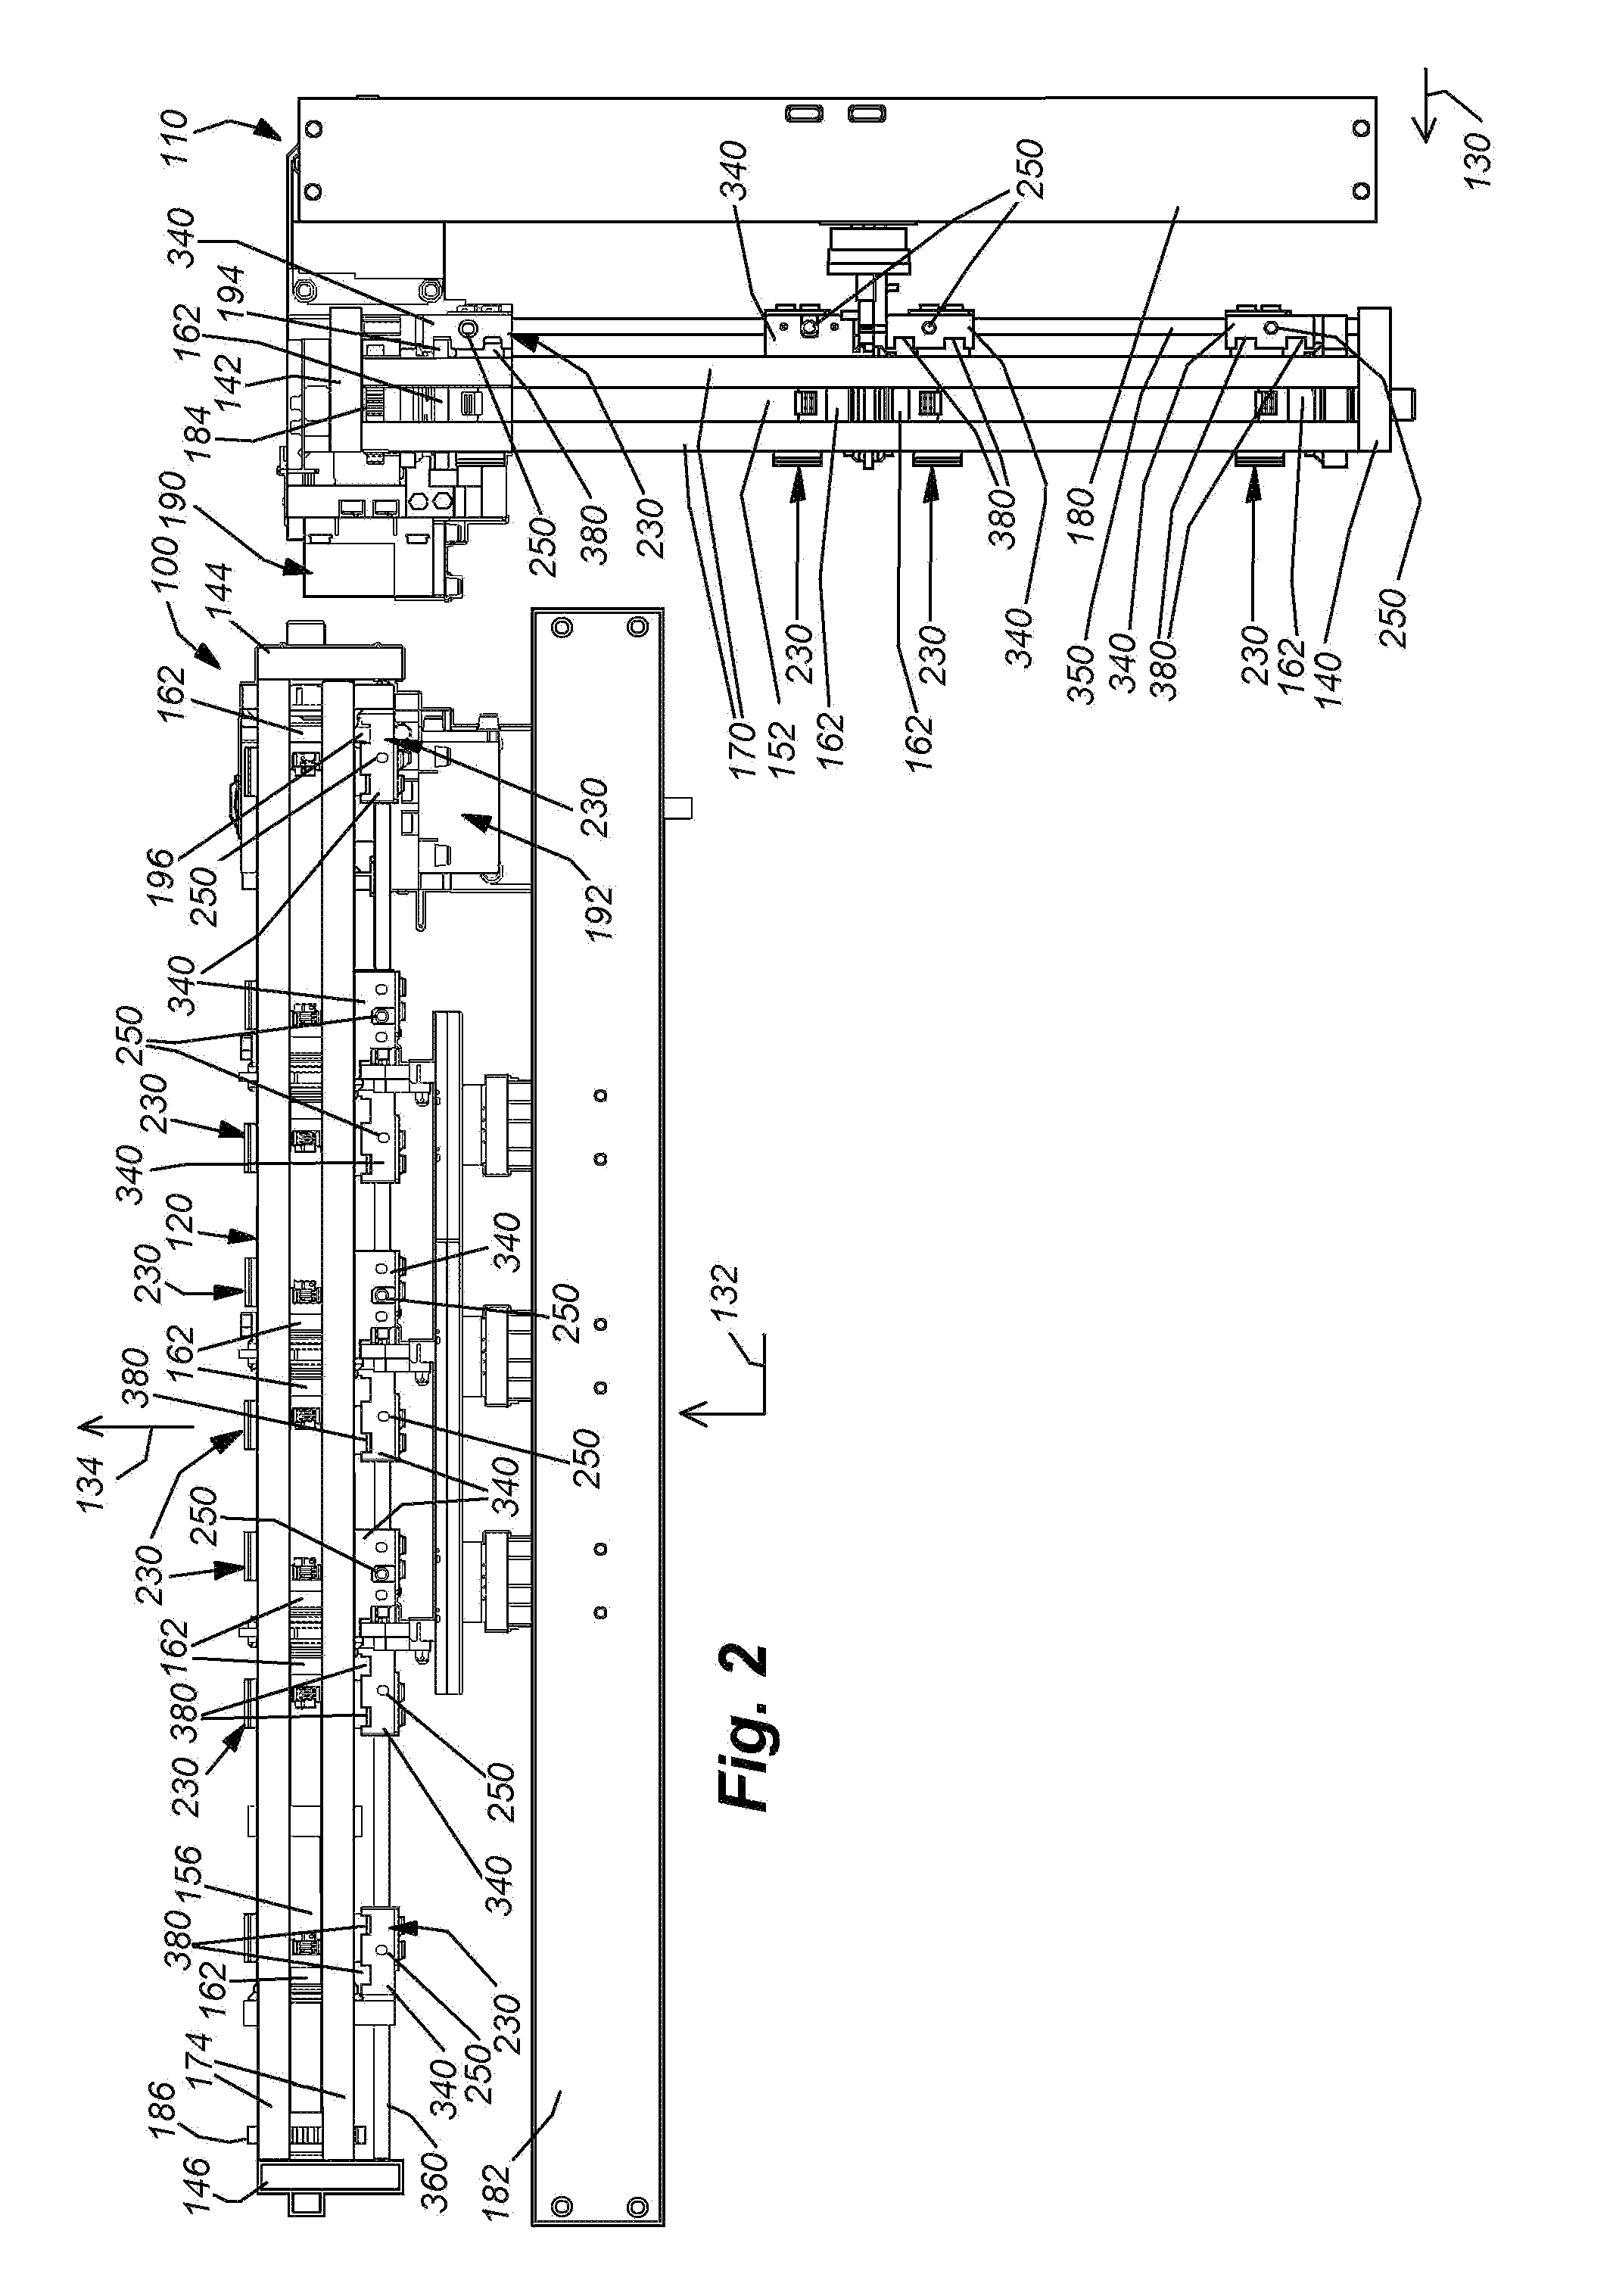 Sheet slitting mechanism with automated size adjustment